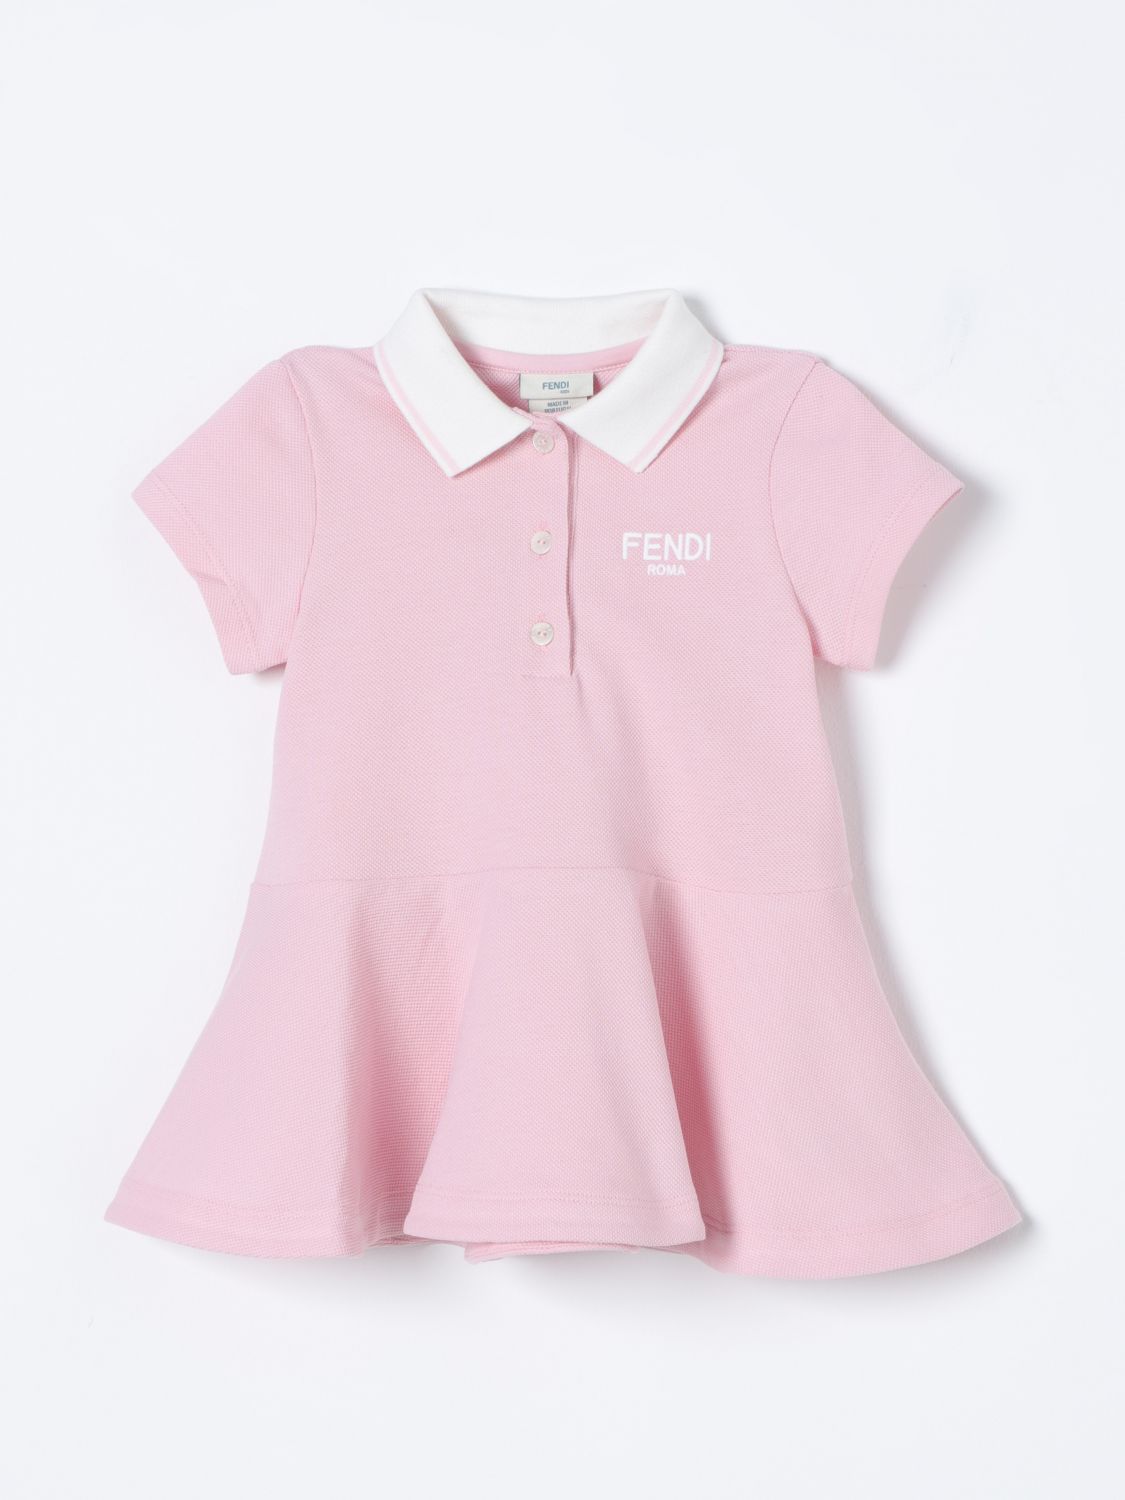 Fendi Babies' Romper  Kids Kids Colour Pink